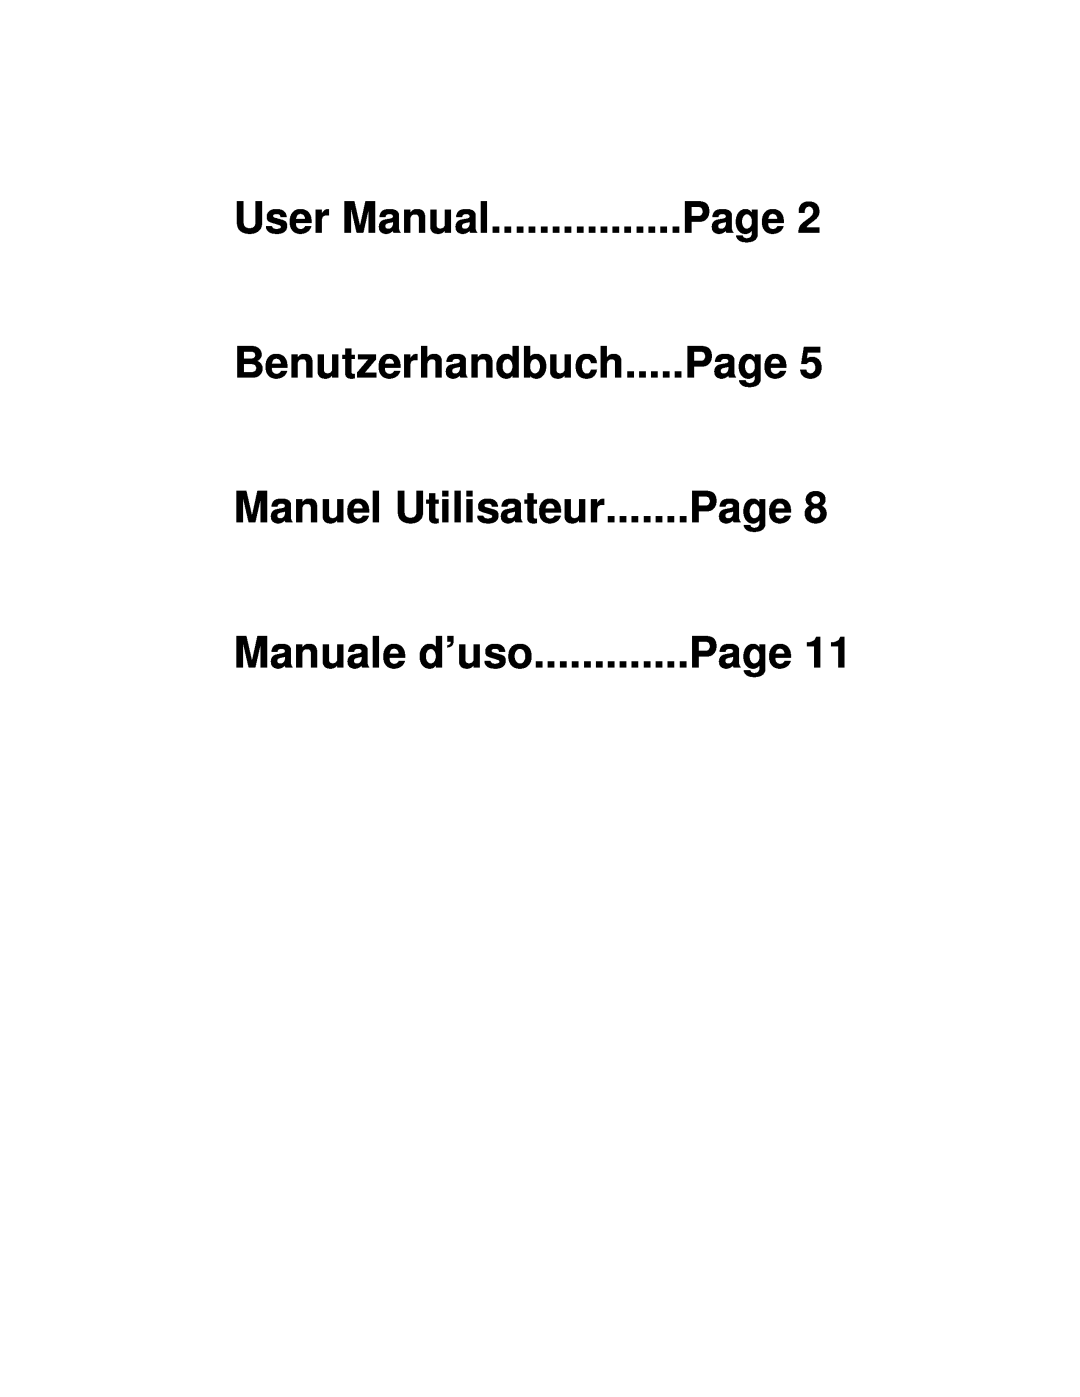 Lindy lindy no. 32594 user manual Page, User Manual, Benutzerhandbuch, Manuel Utilisateur, Manuale d’uso 